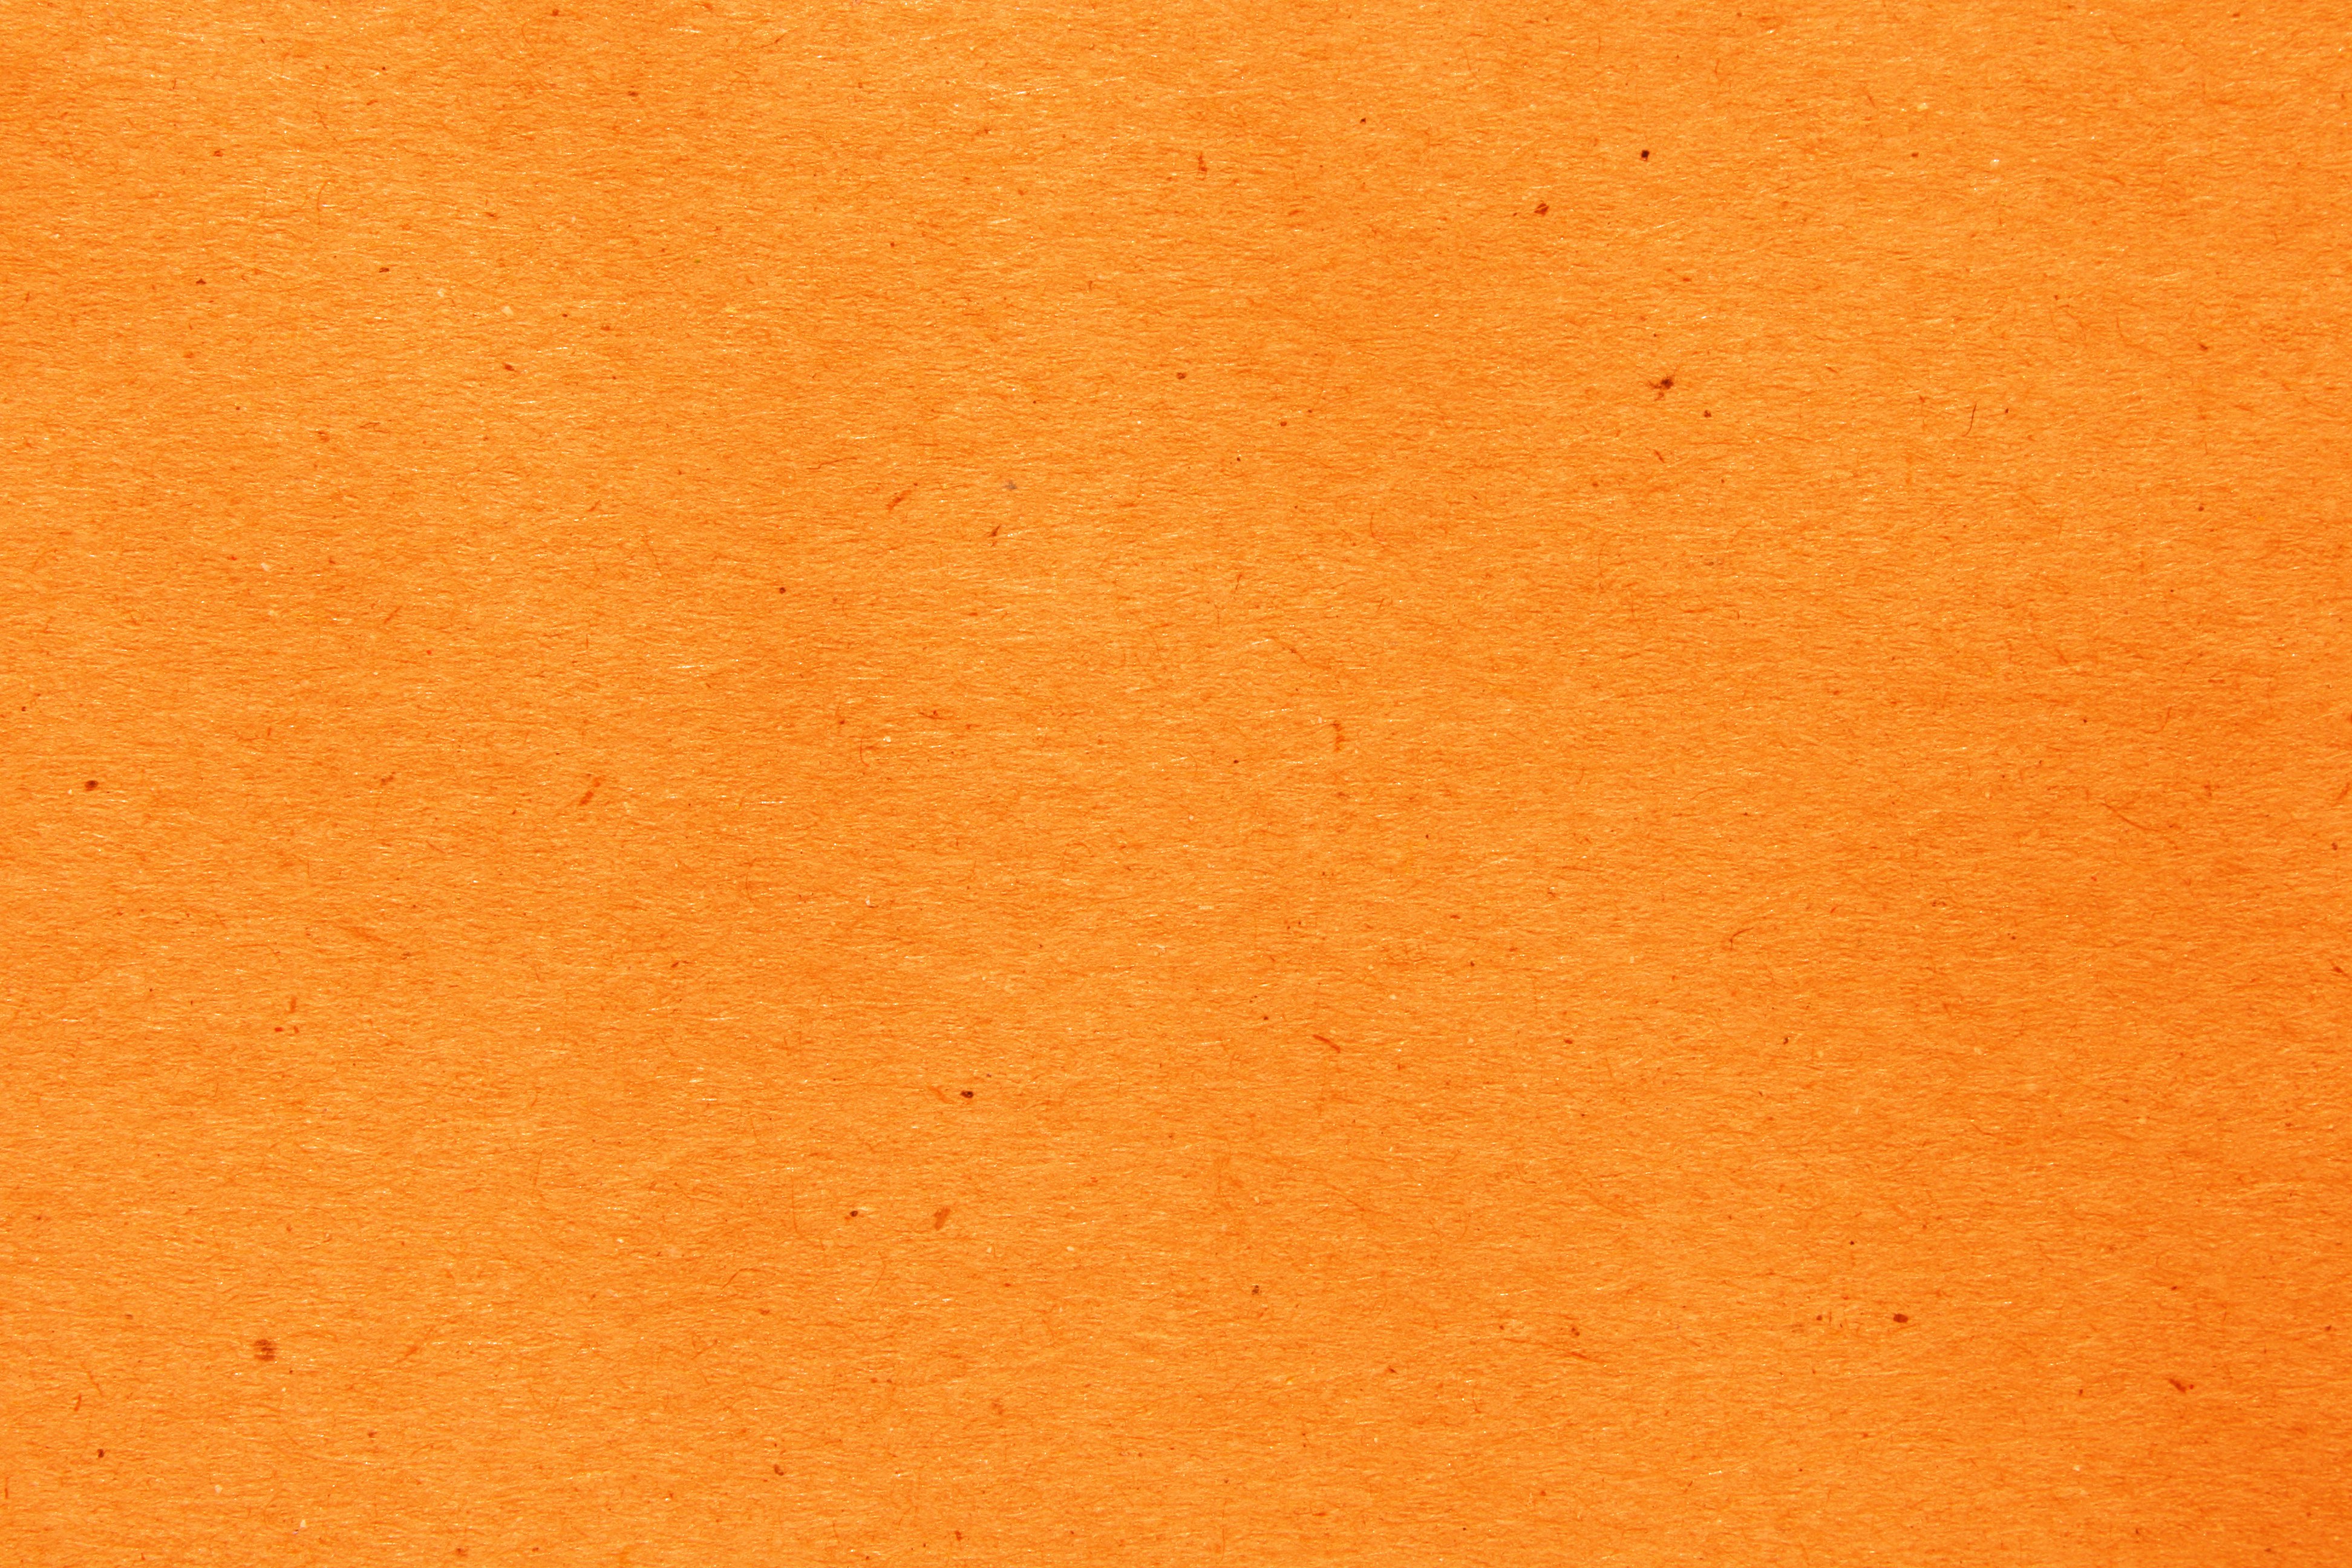 Orange Paper Texture With Flecks Picture Photograph Photos